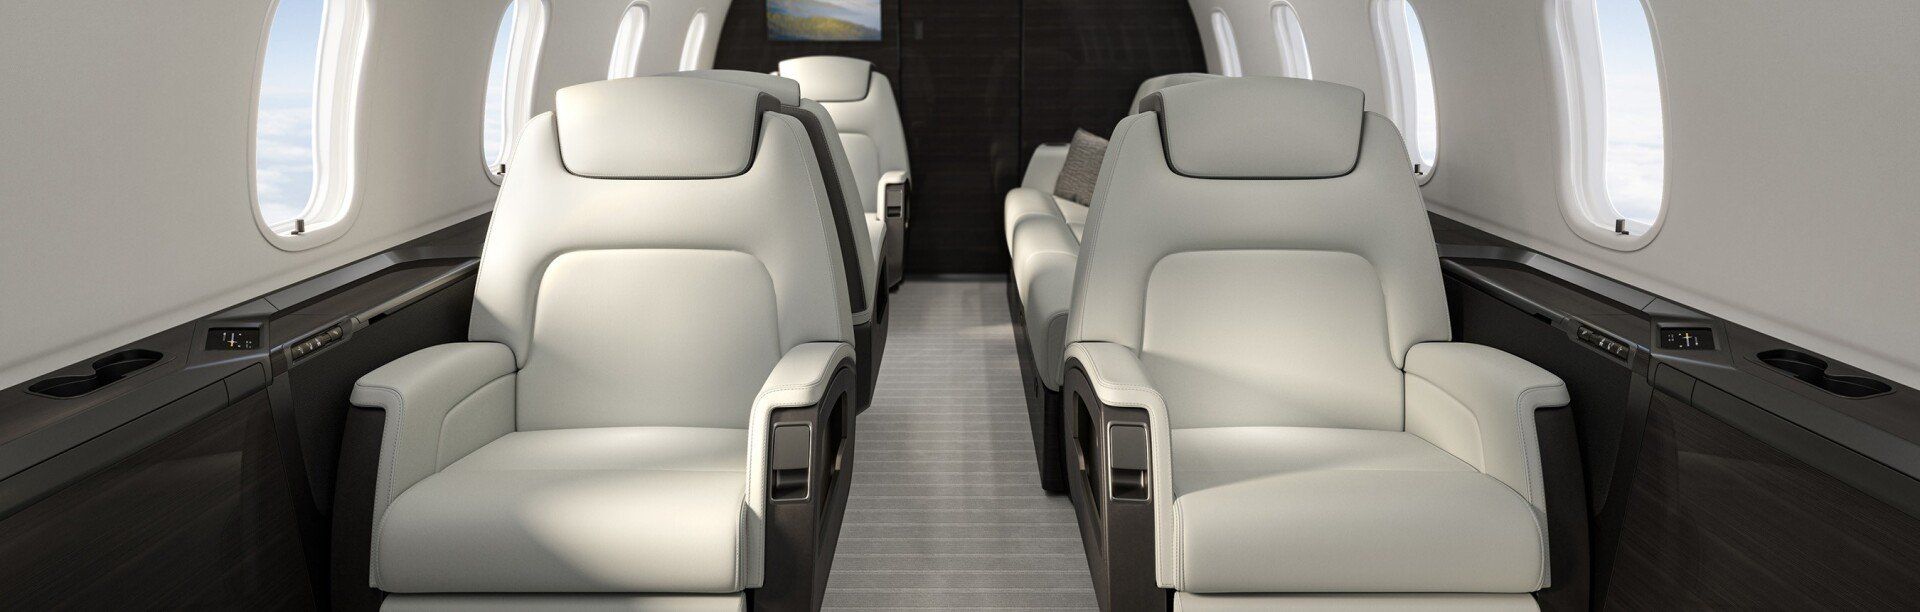 Bombardier Challenger 350 Charter Flight